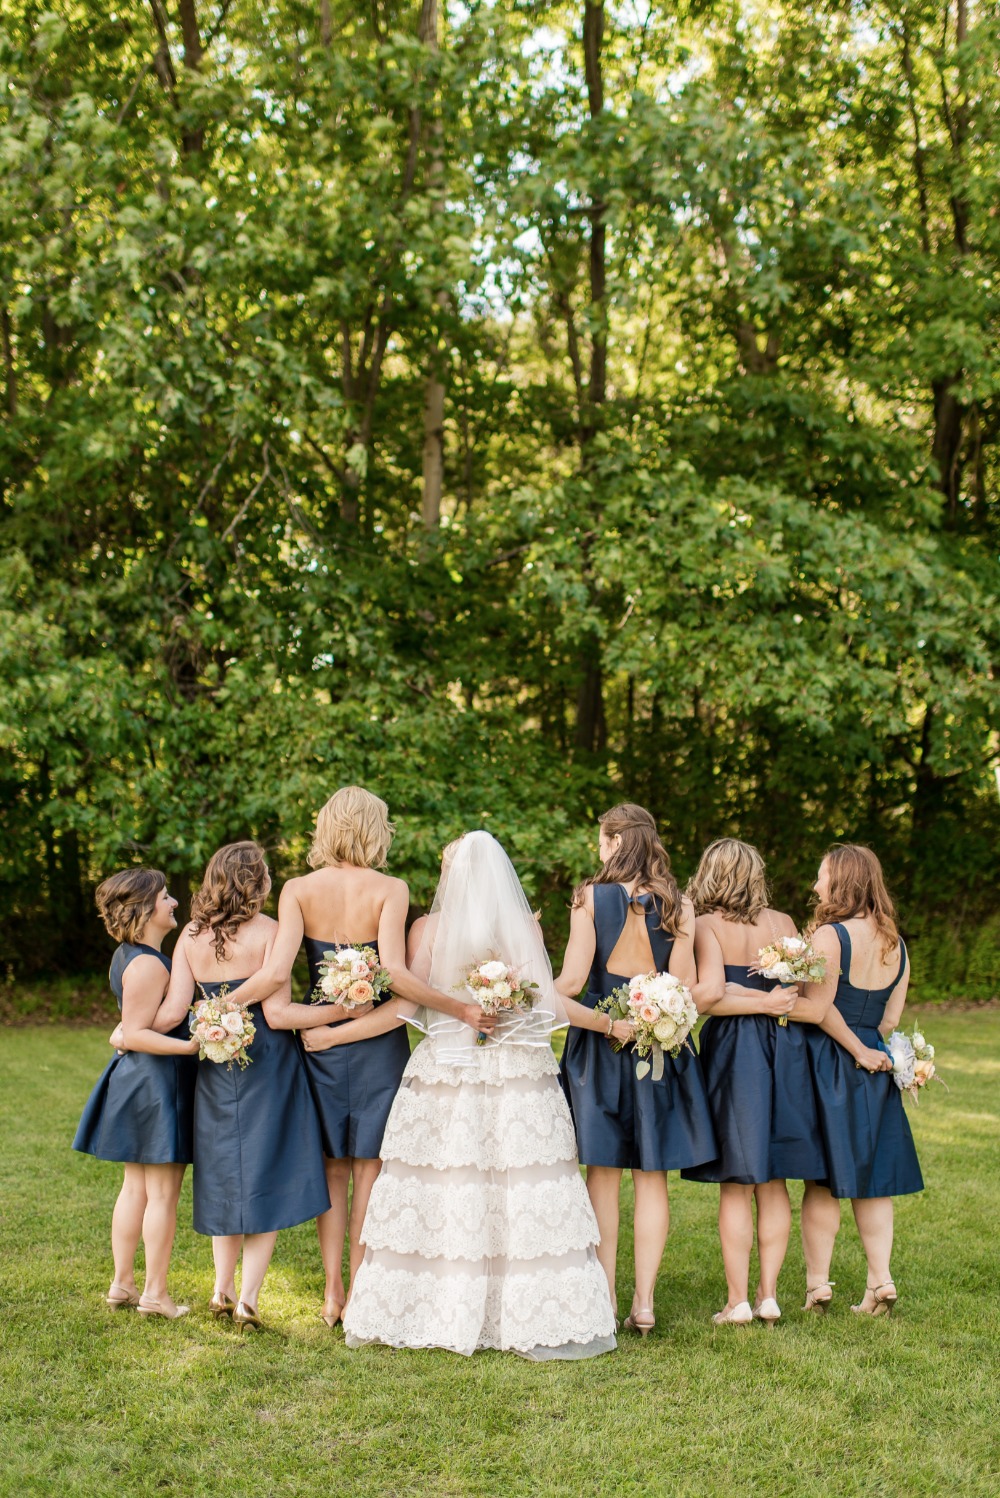 Bridesmaids in navy blue